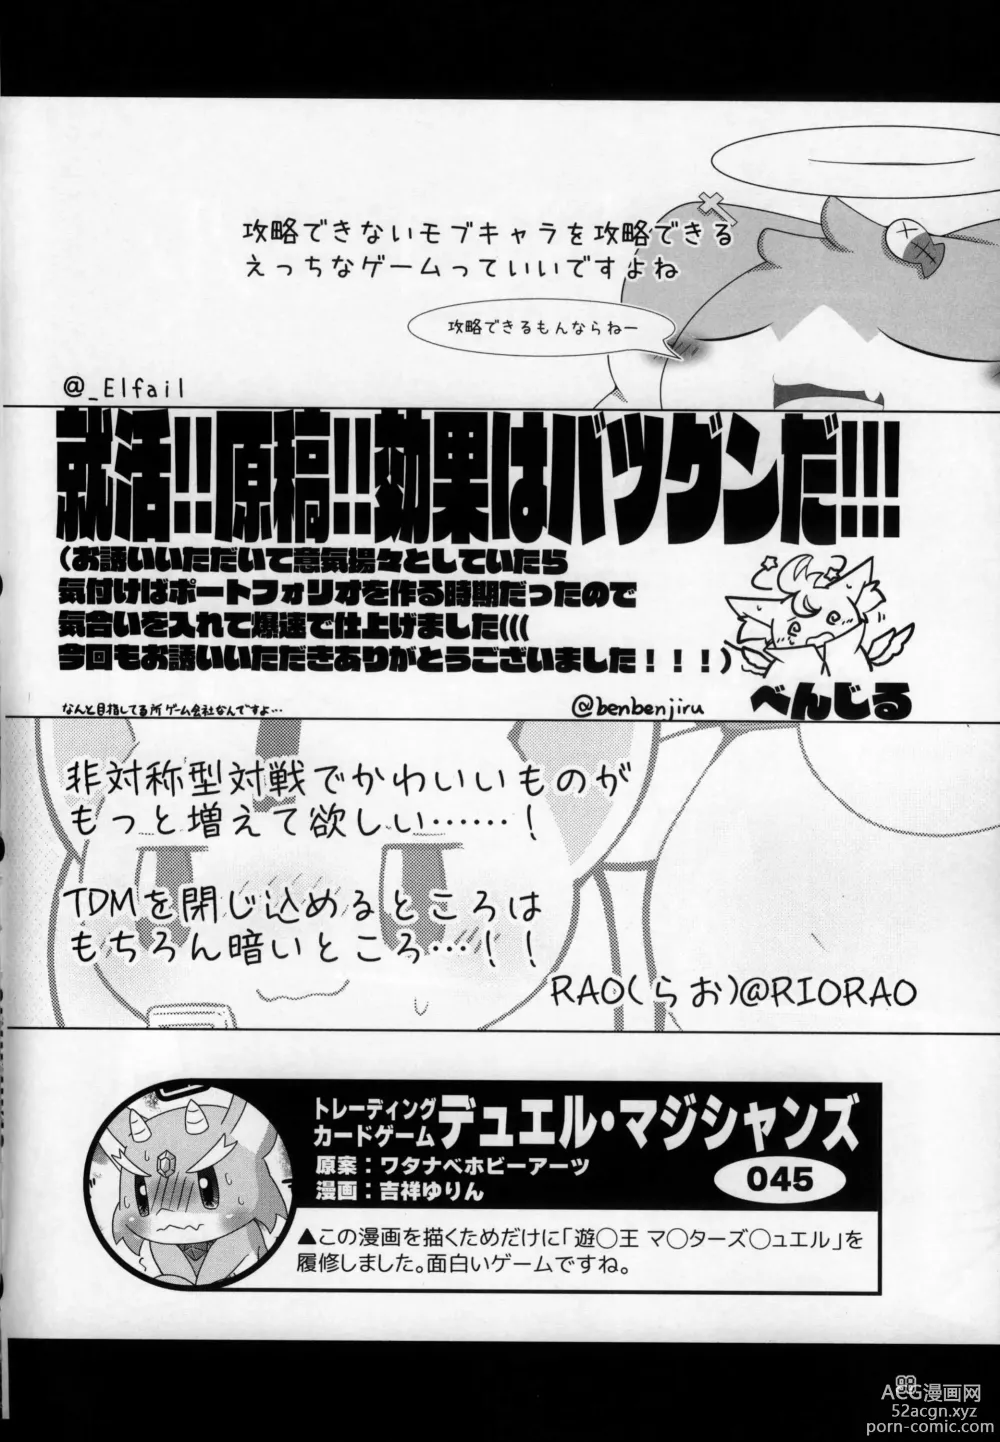 Page 98 of doujinshi 低头身Q版吉祥物 vol.8 Type-Z